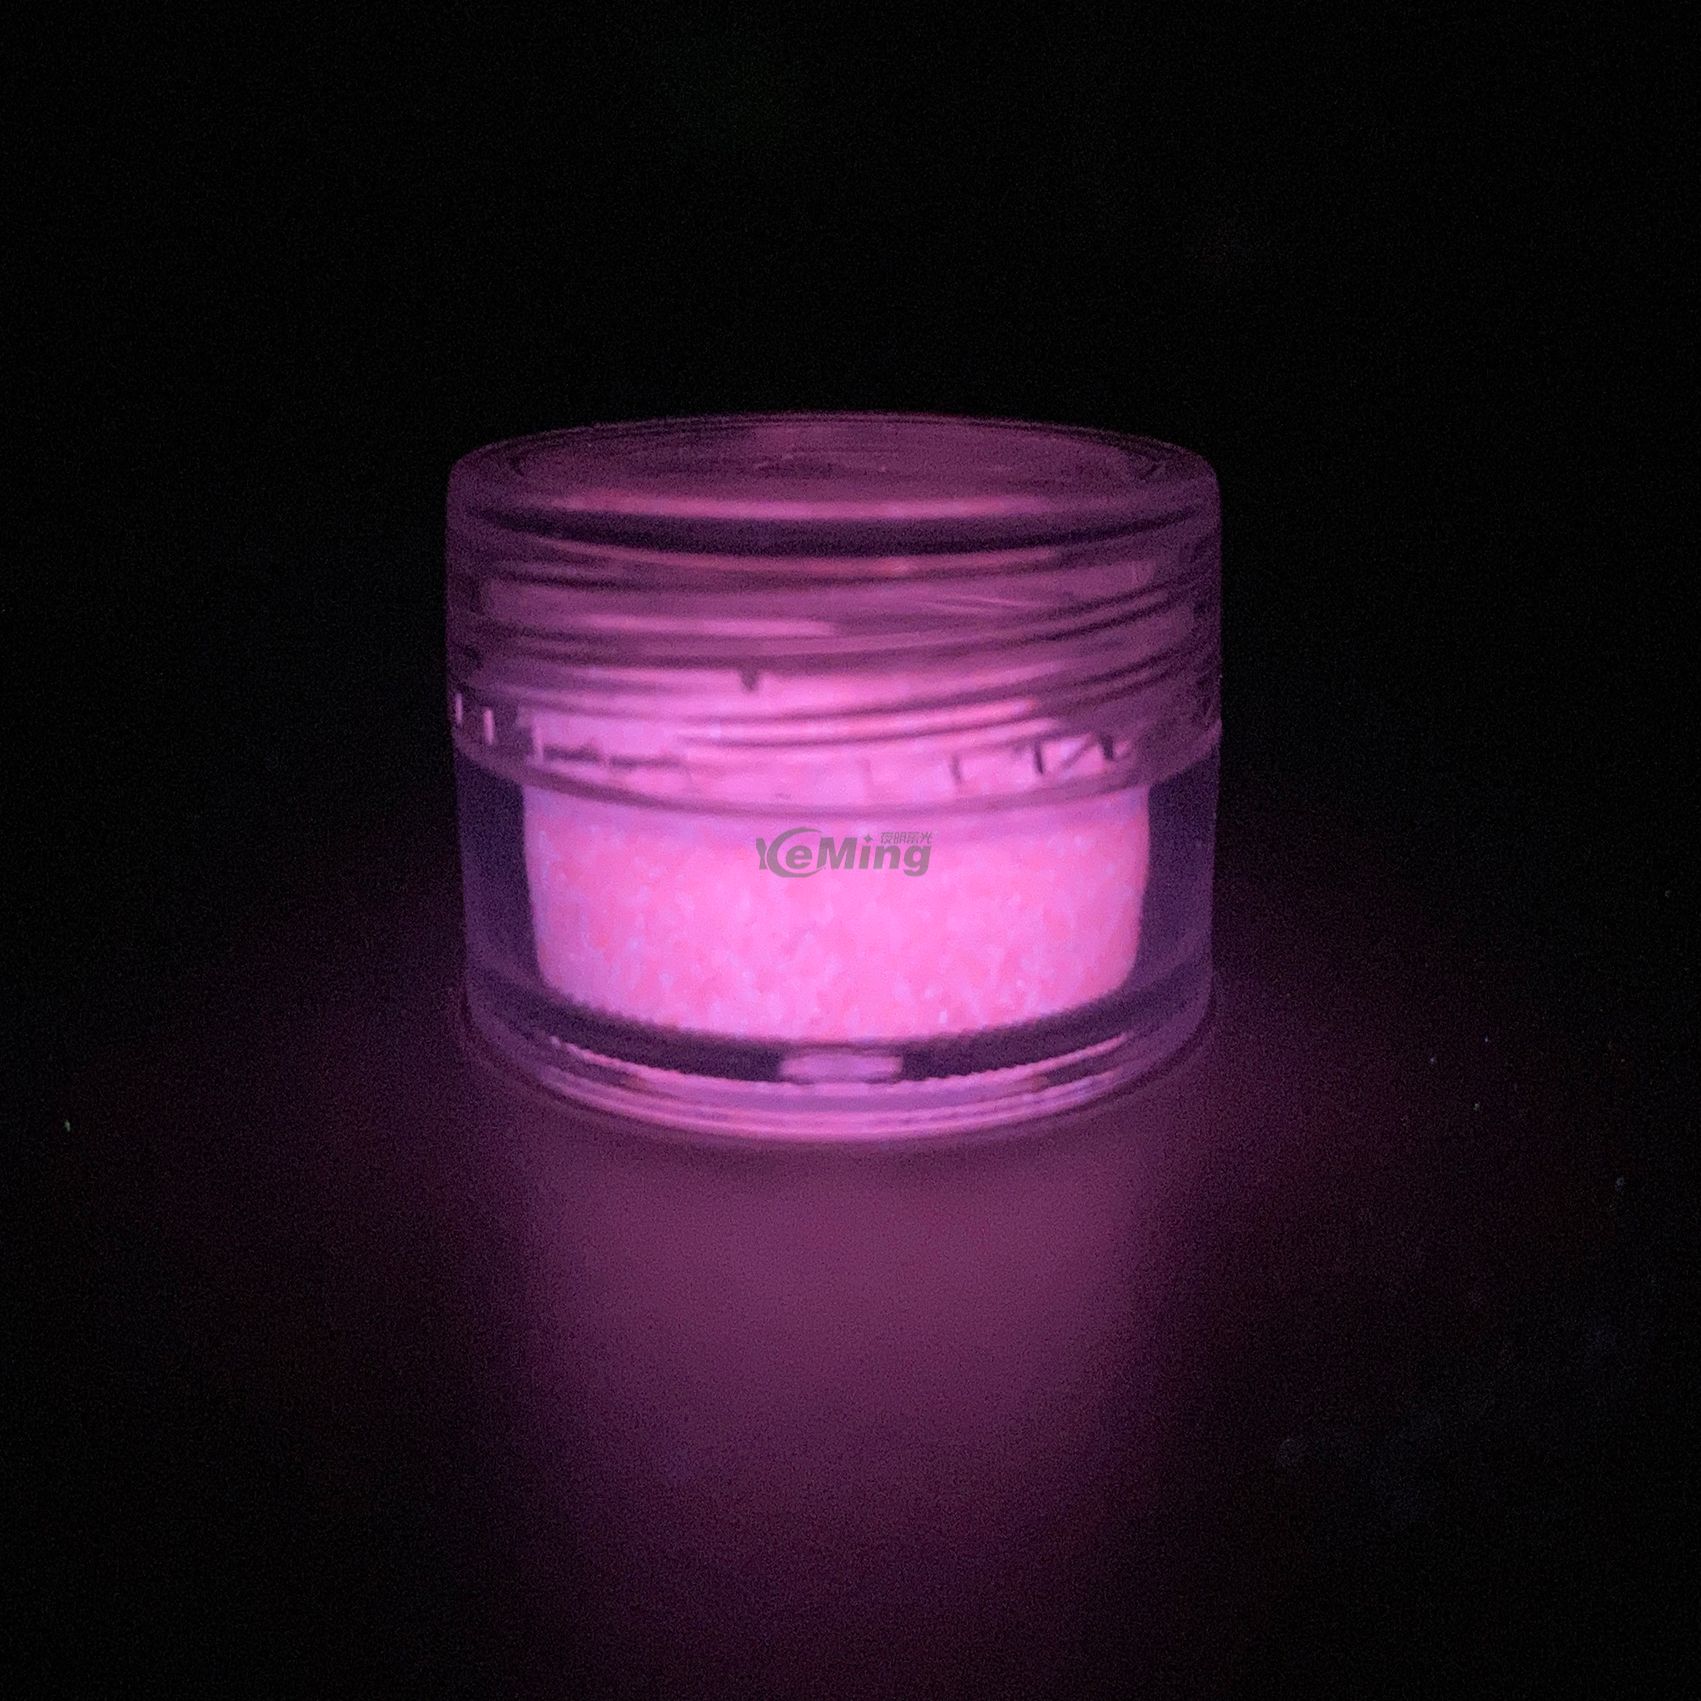 Luminescent Powder Luminous Powder Glow Powder